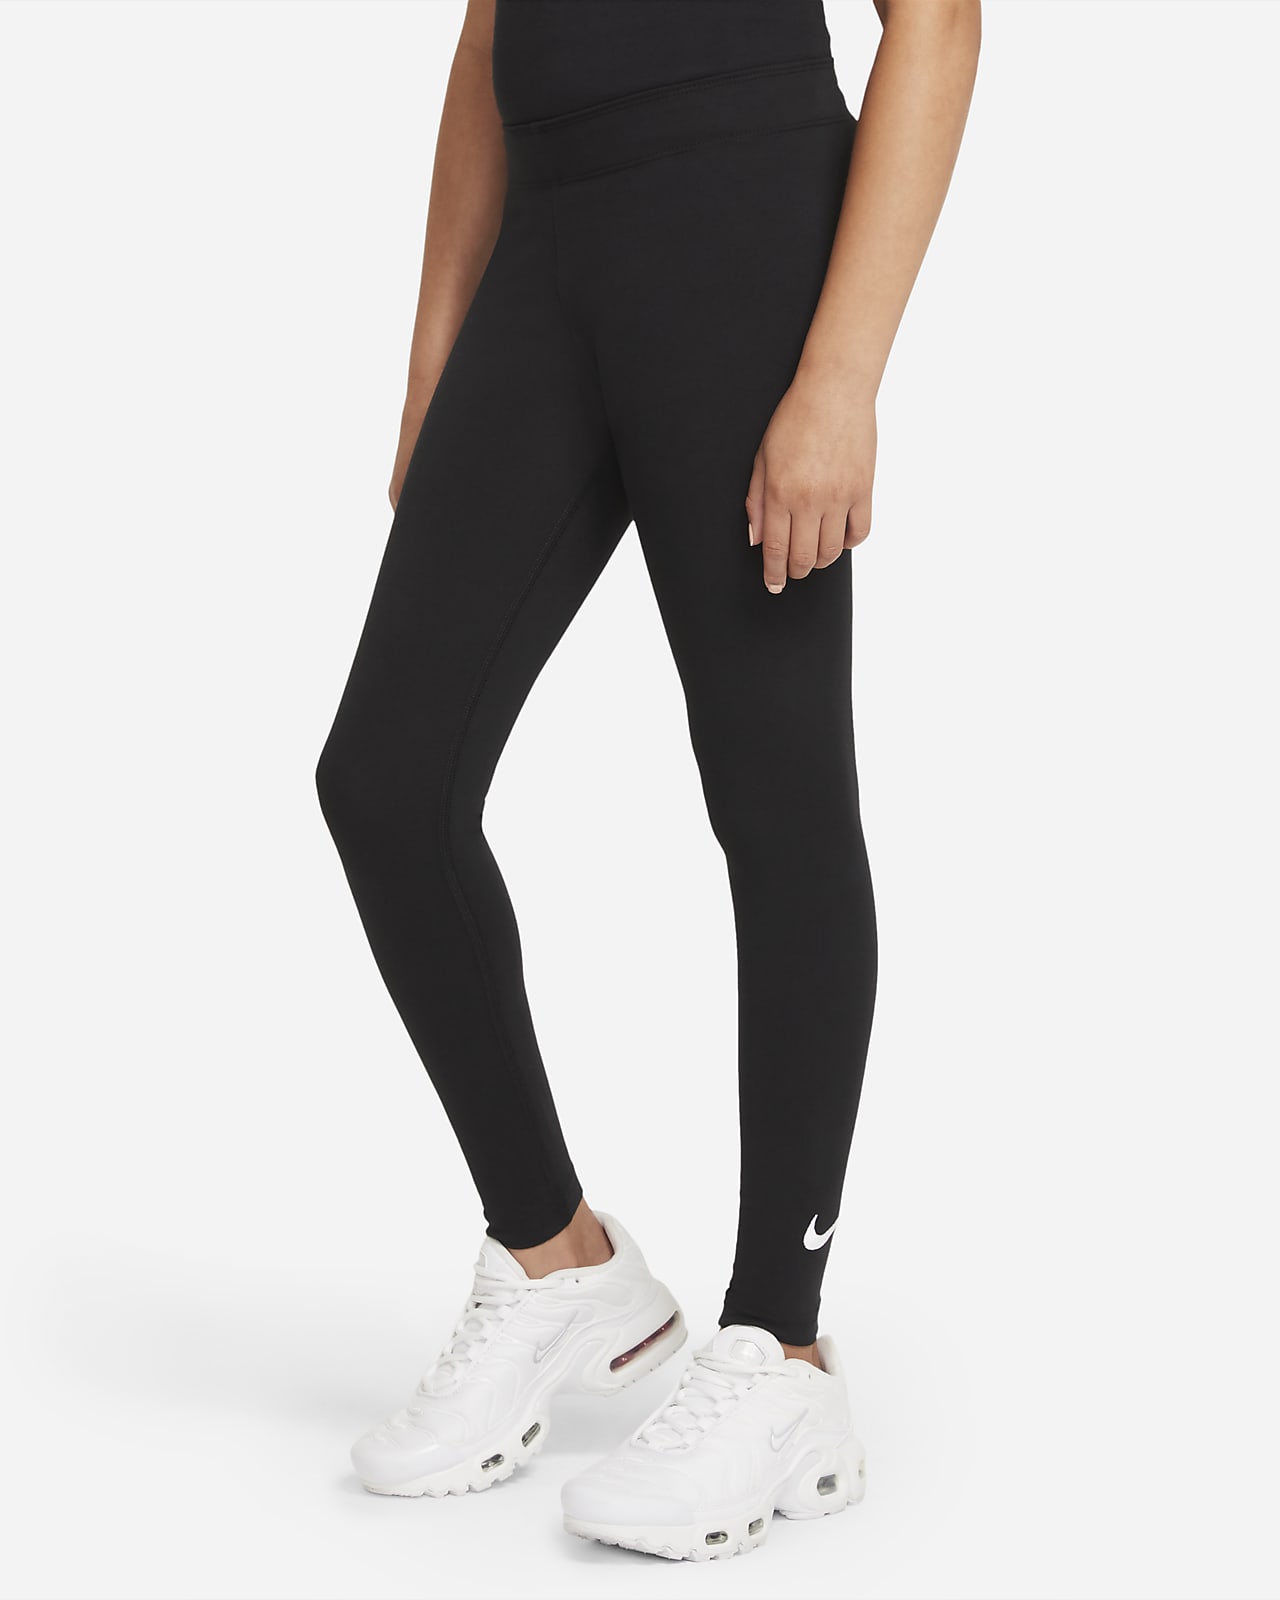 ik klaag Maken Portret Nike Sportswear Favorites Legging met Swoosh voor meisjes. Nike NL